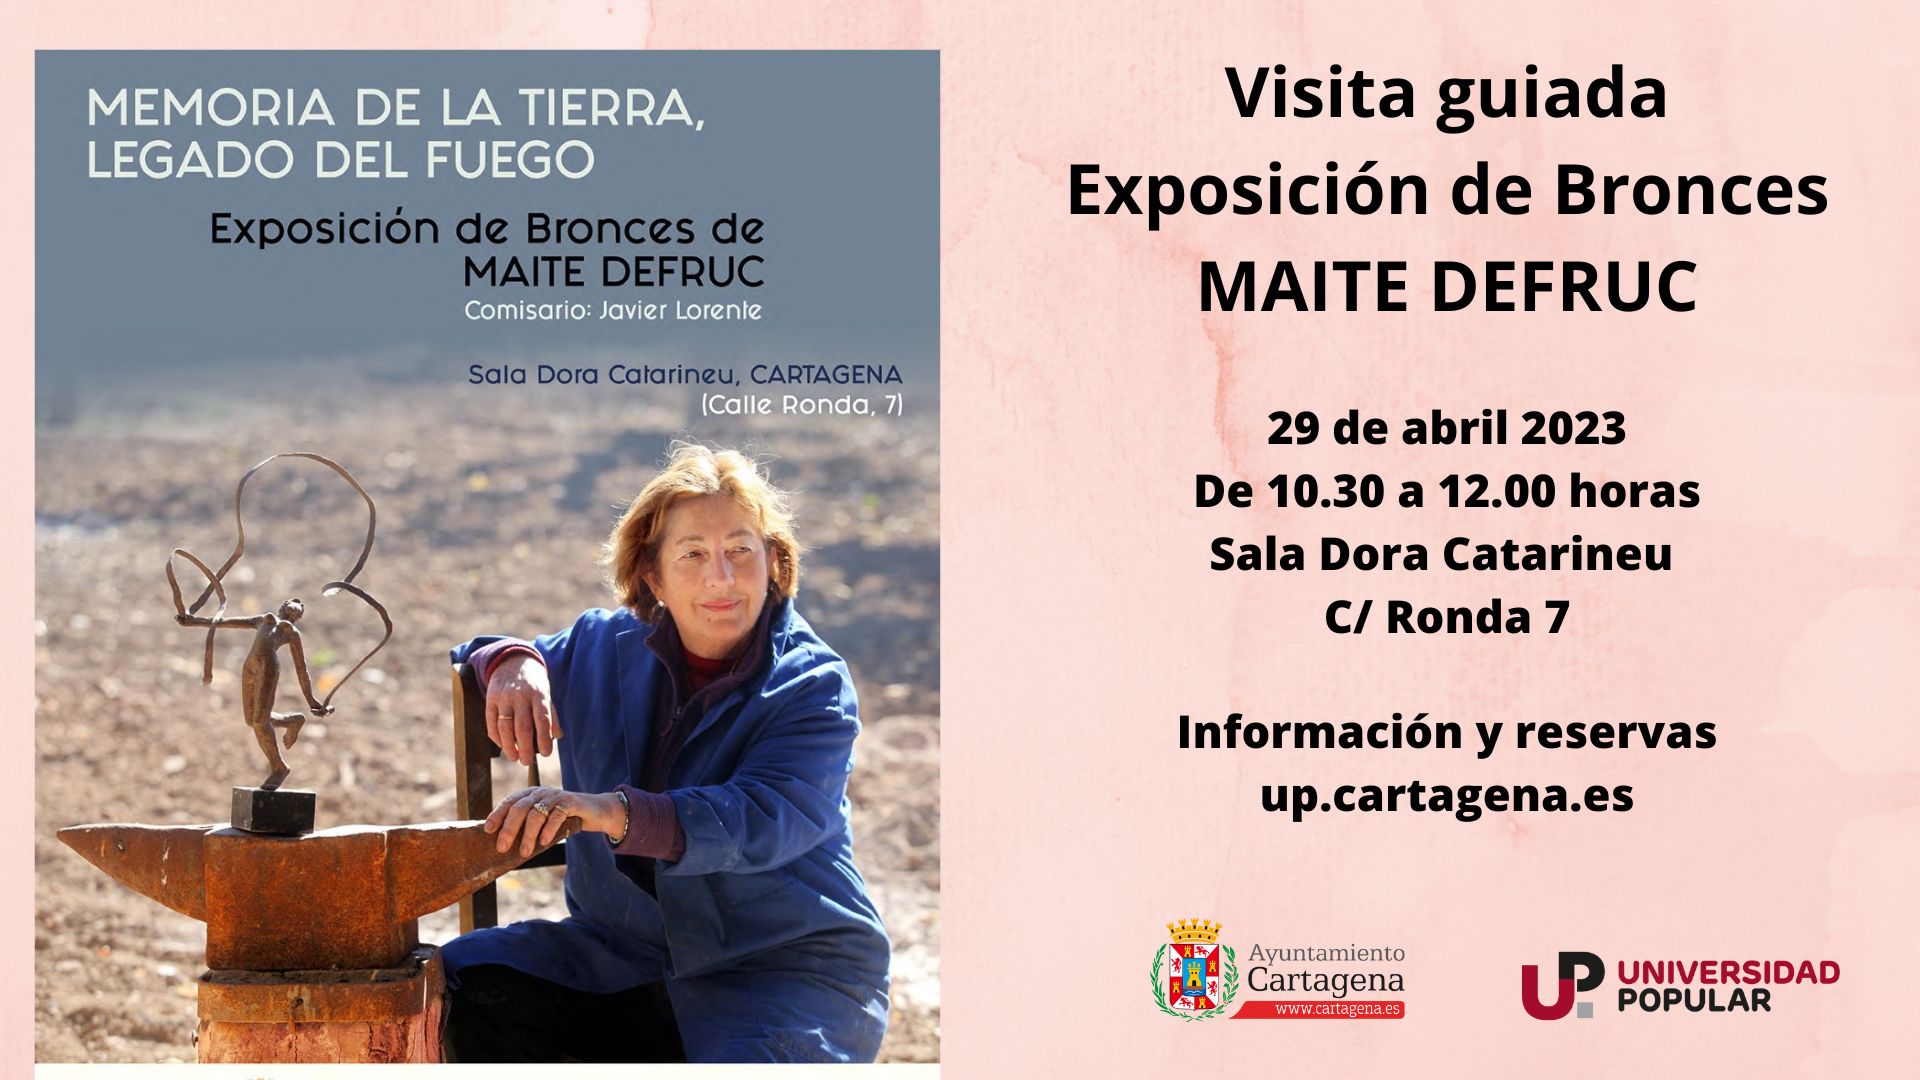 VISITA GUIADA EXPOSICIÓN DE BRONCES MAITE DEFRUC 